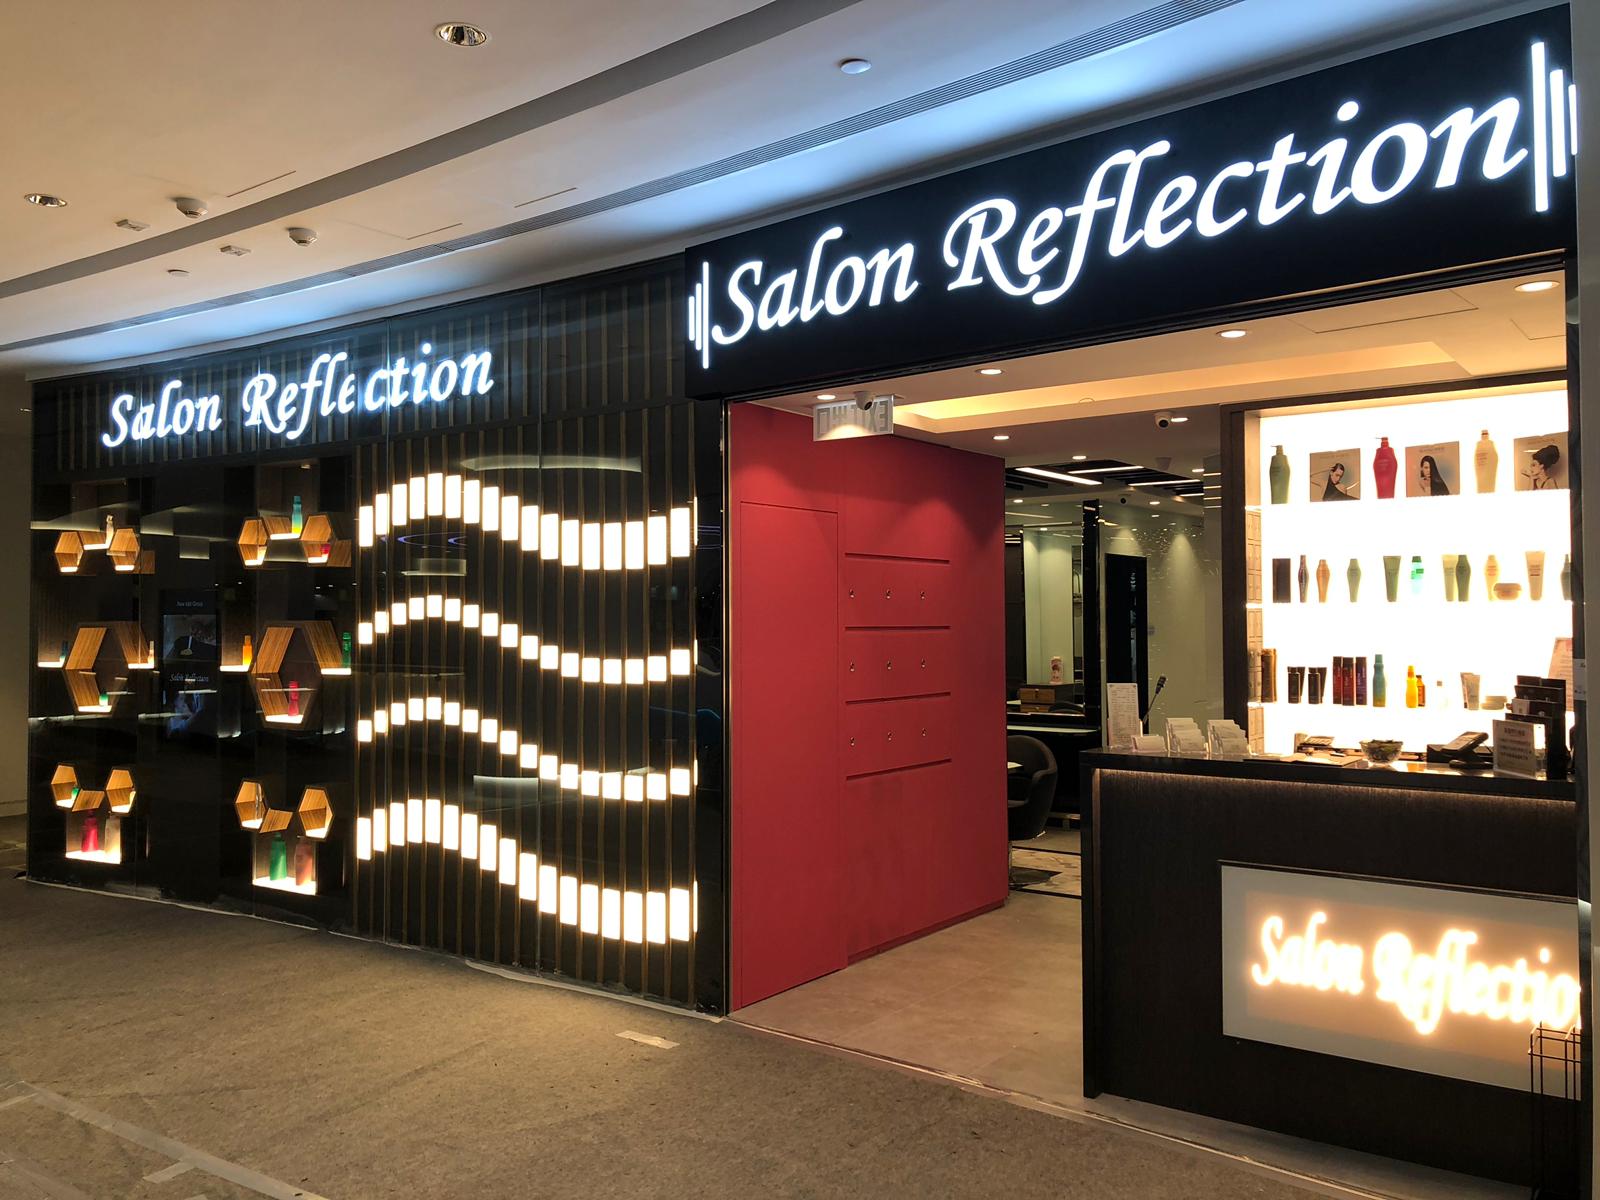 Salon Reflection髮型屋Salon/髮型師工作招聘:聘髮型師、助理、技術員及兼職前台